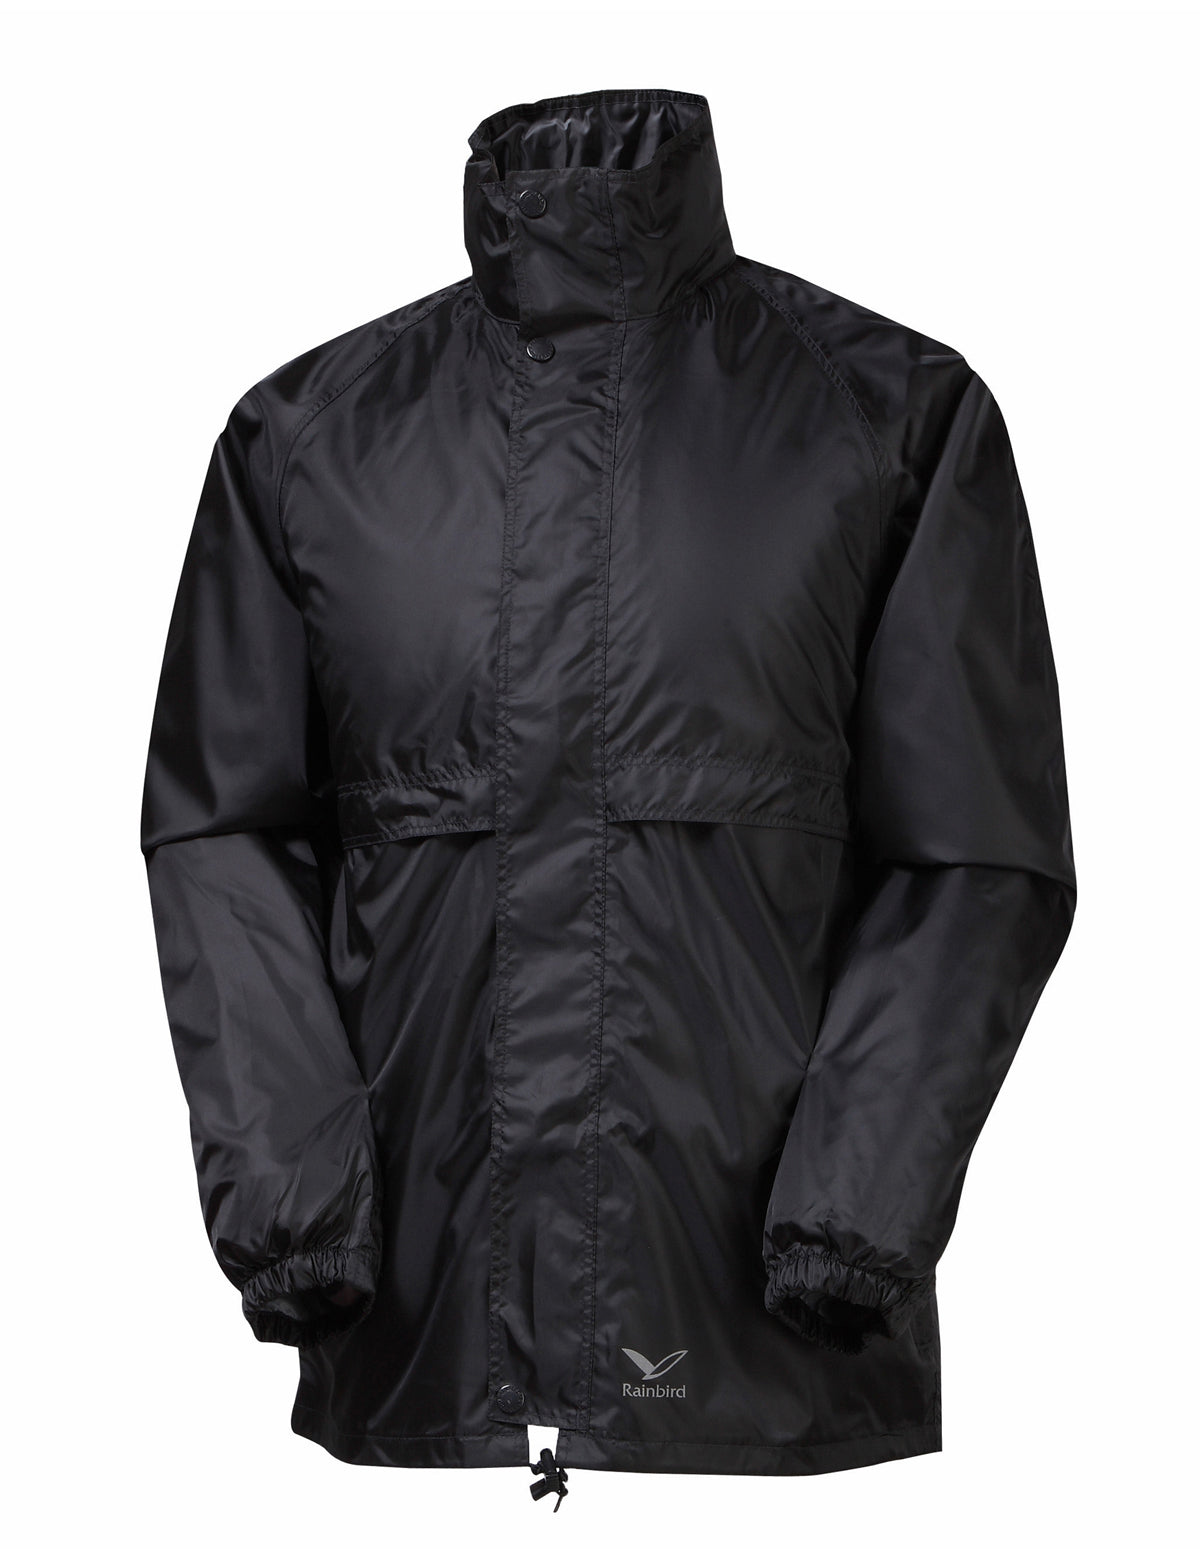 Rainbird STOWaway Jacket Womens Fashion Mature by Rainbird | The Bloke Shop